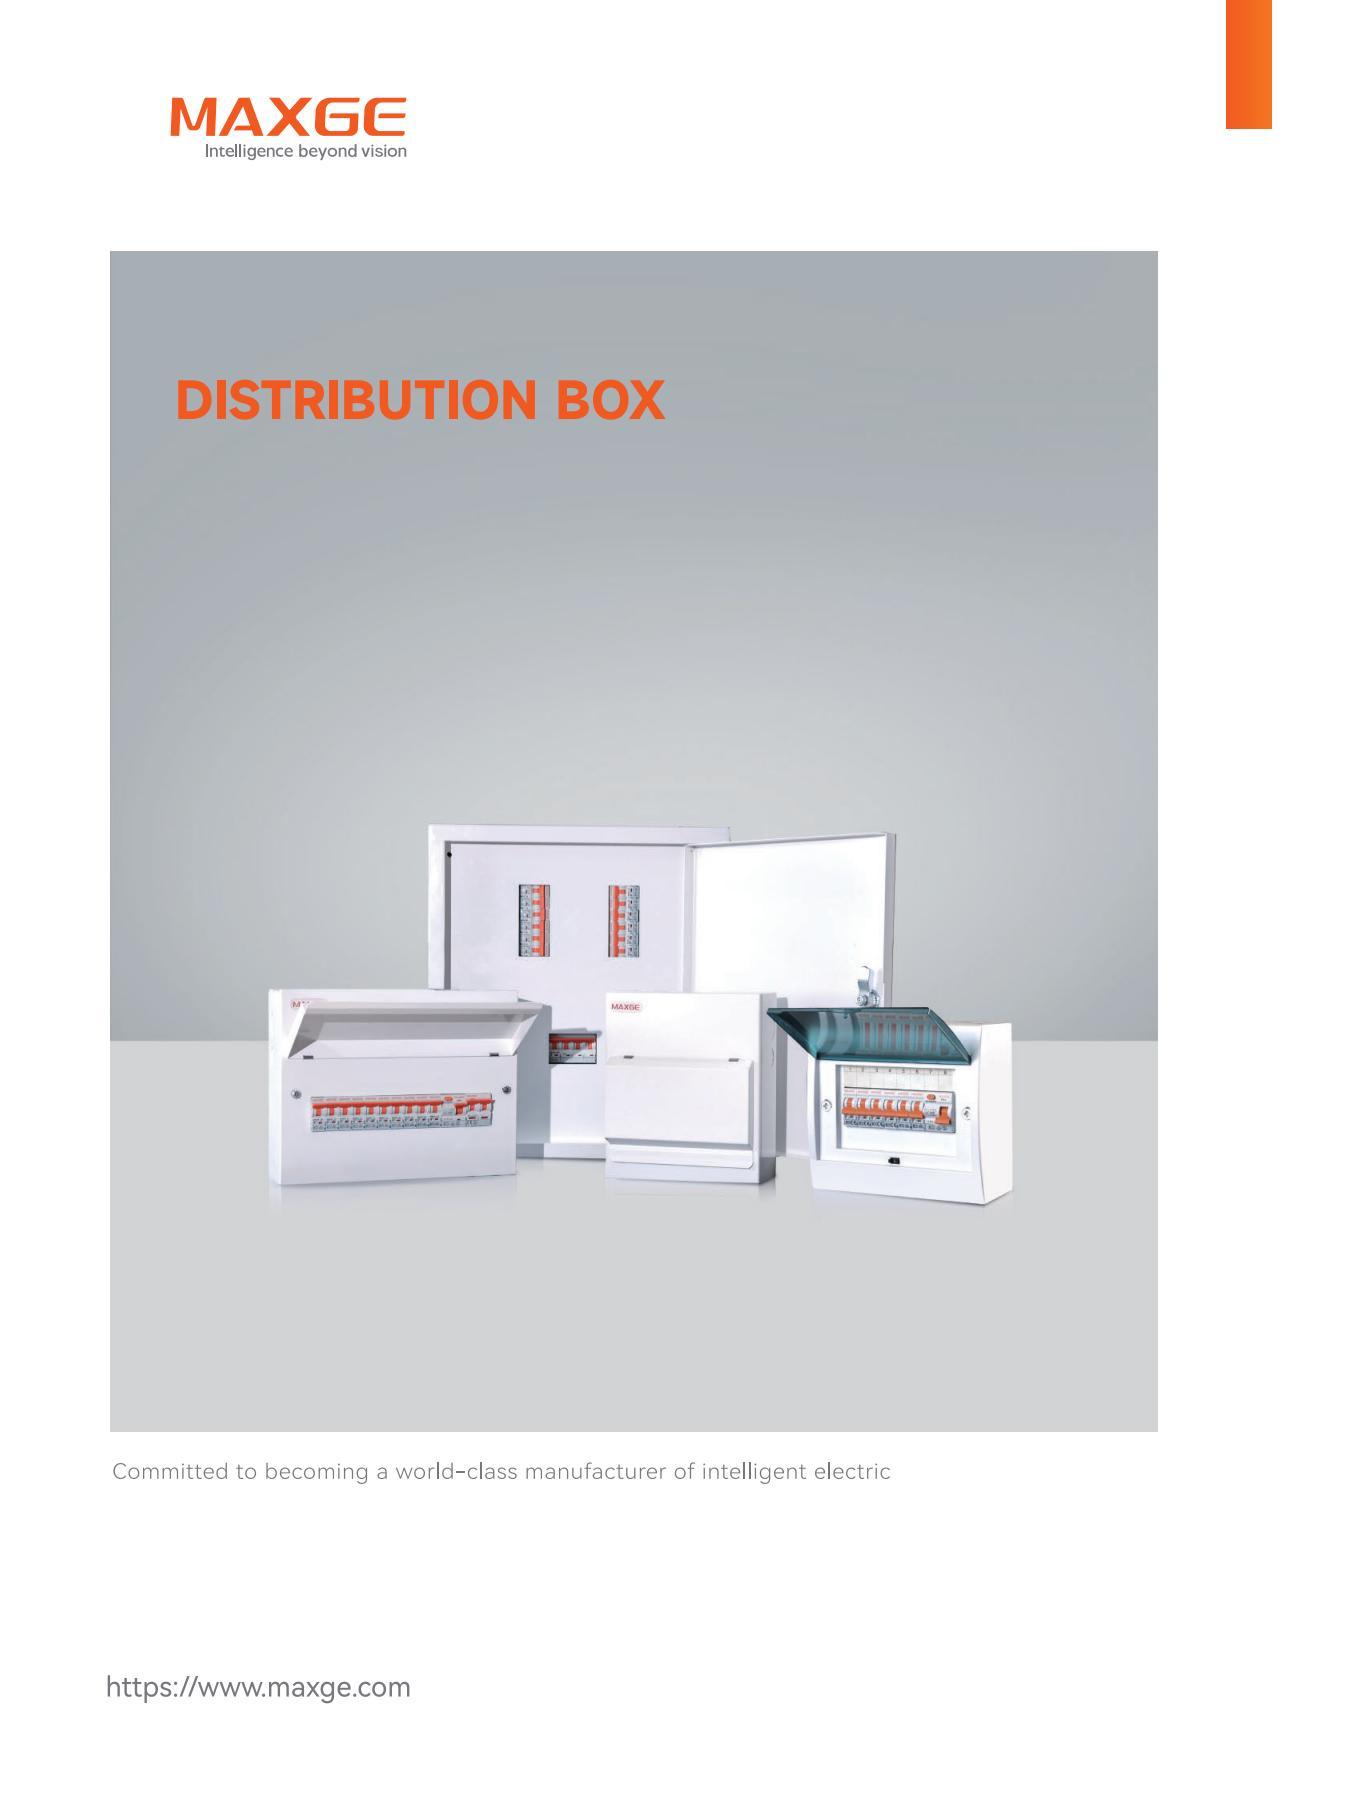 MAXGE Distribution Box Catalog